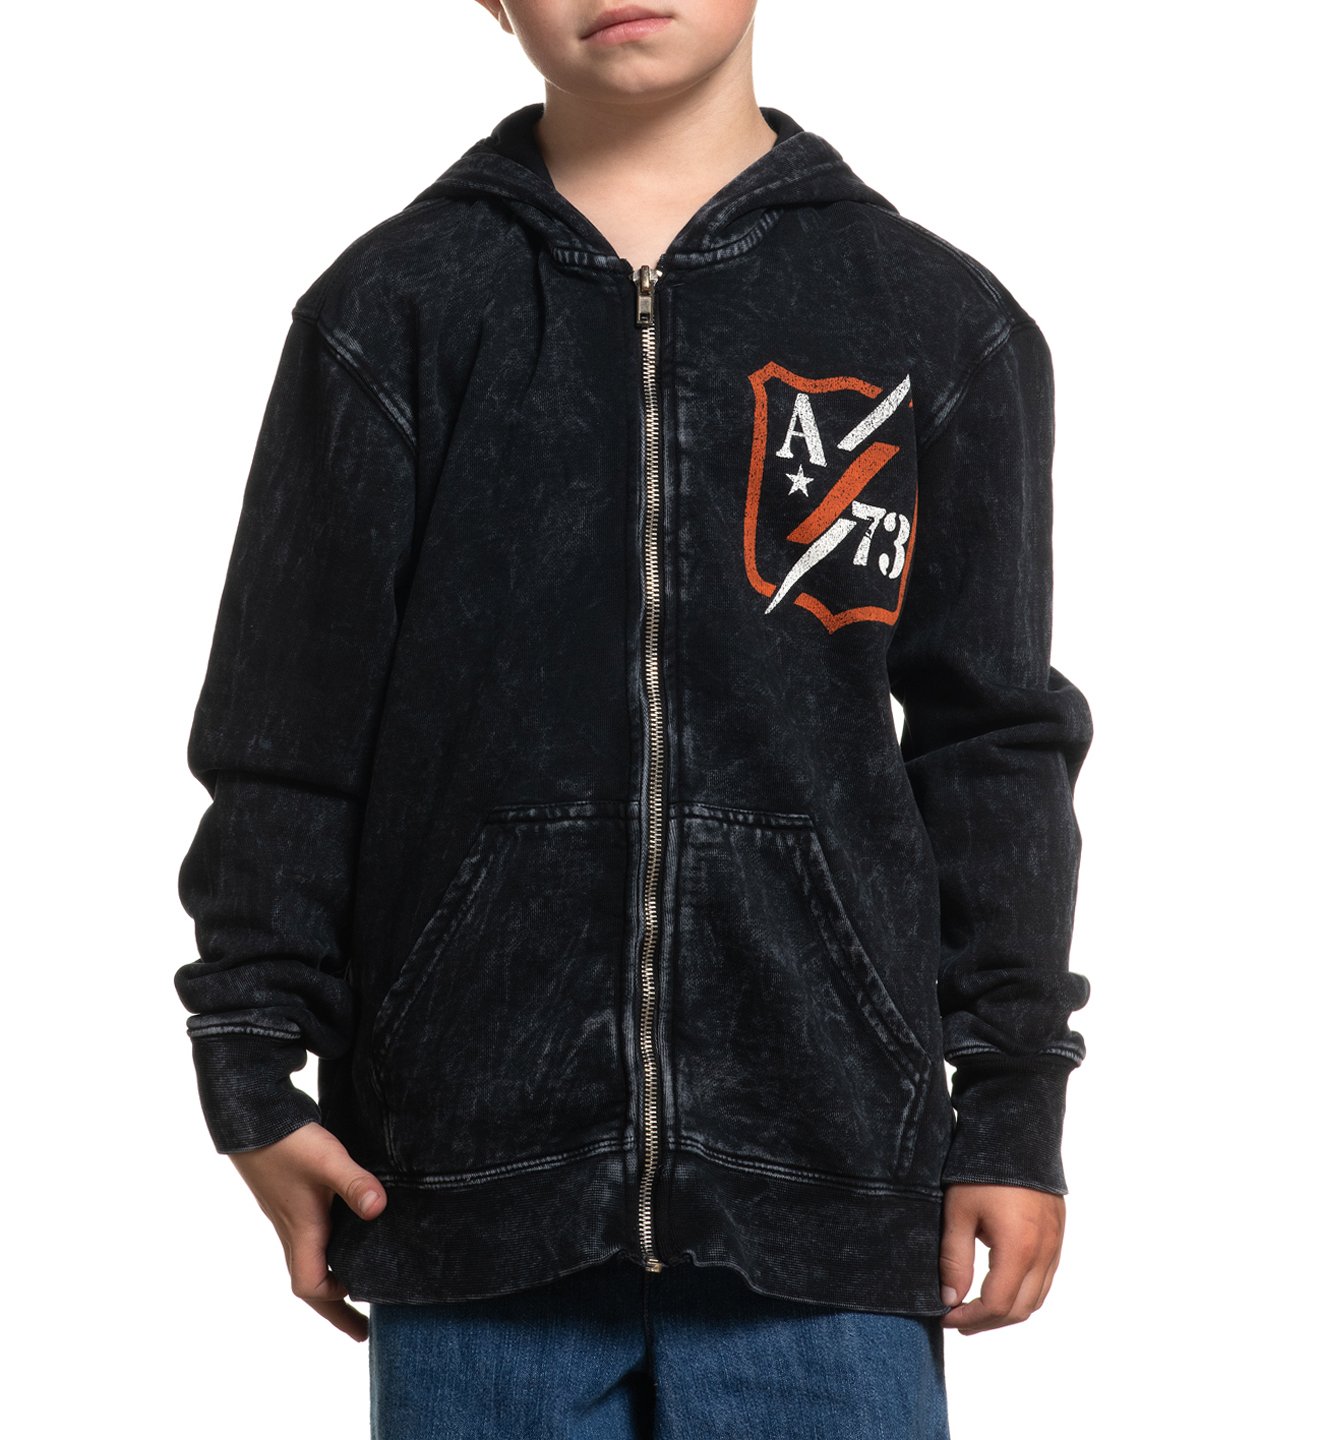 Abandon Zip Hood-Youth - Kids Hooded Sweatshirts - Affliction Clothing